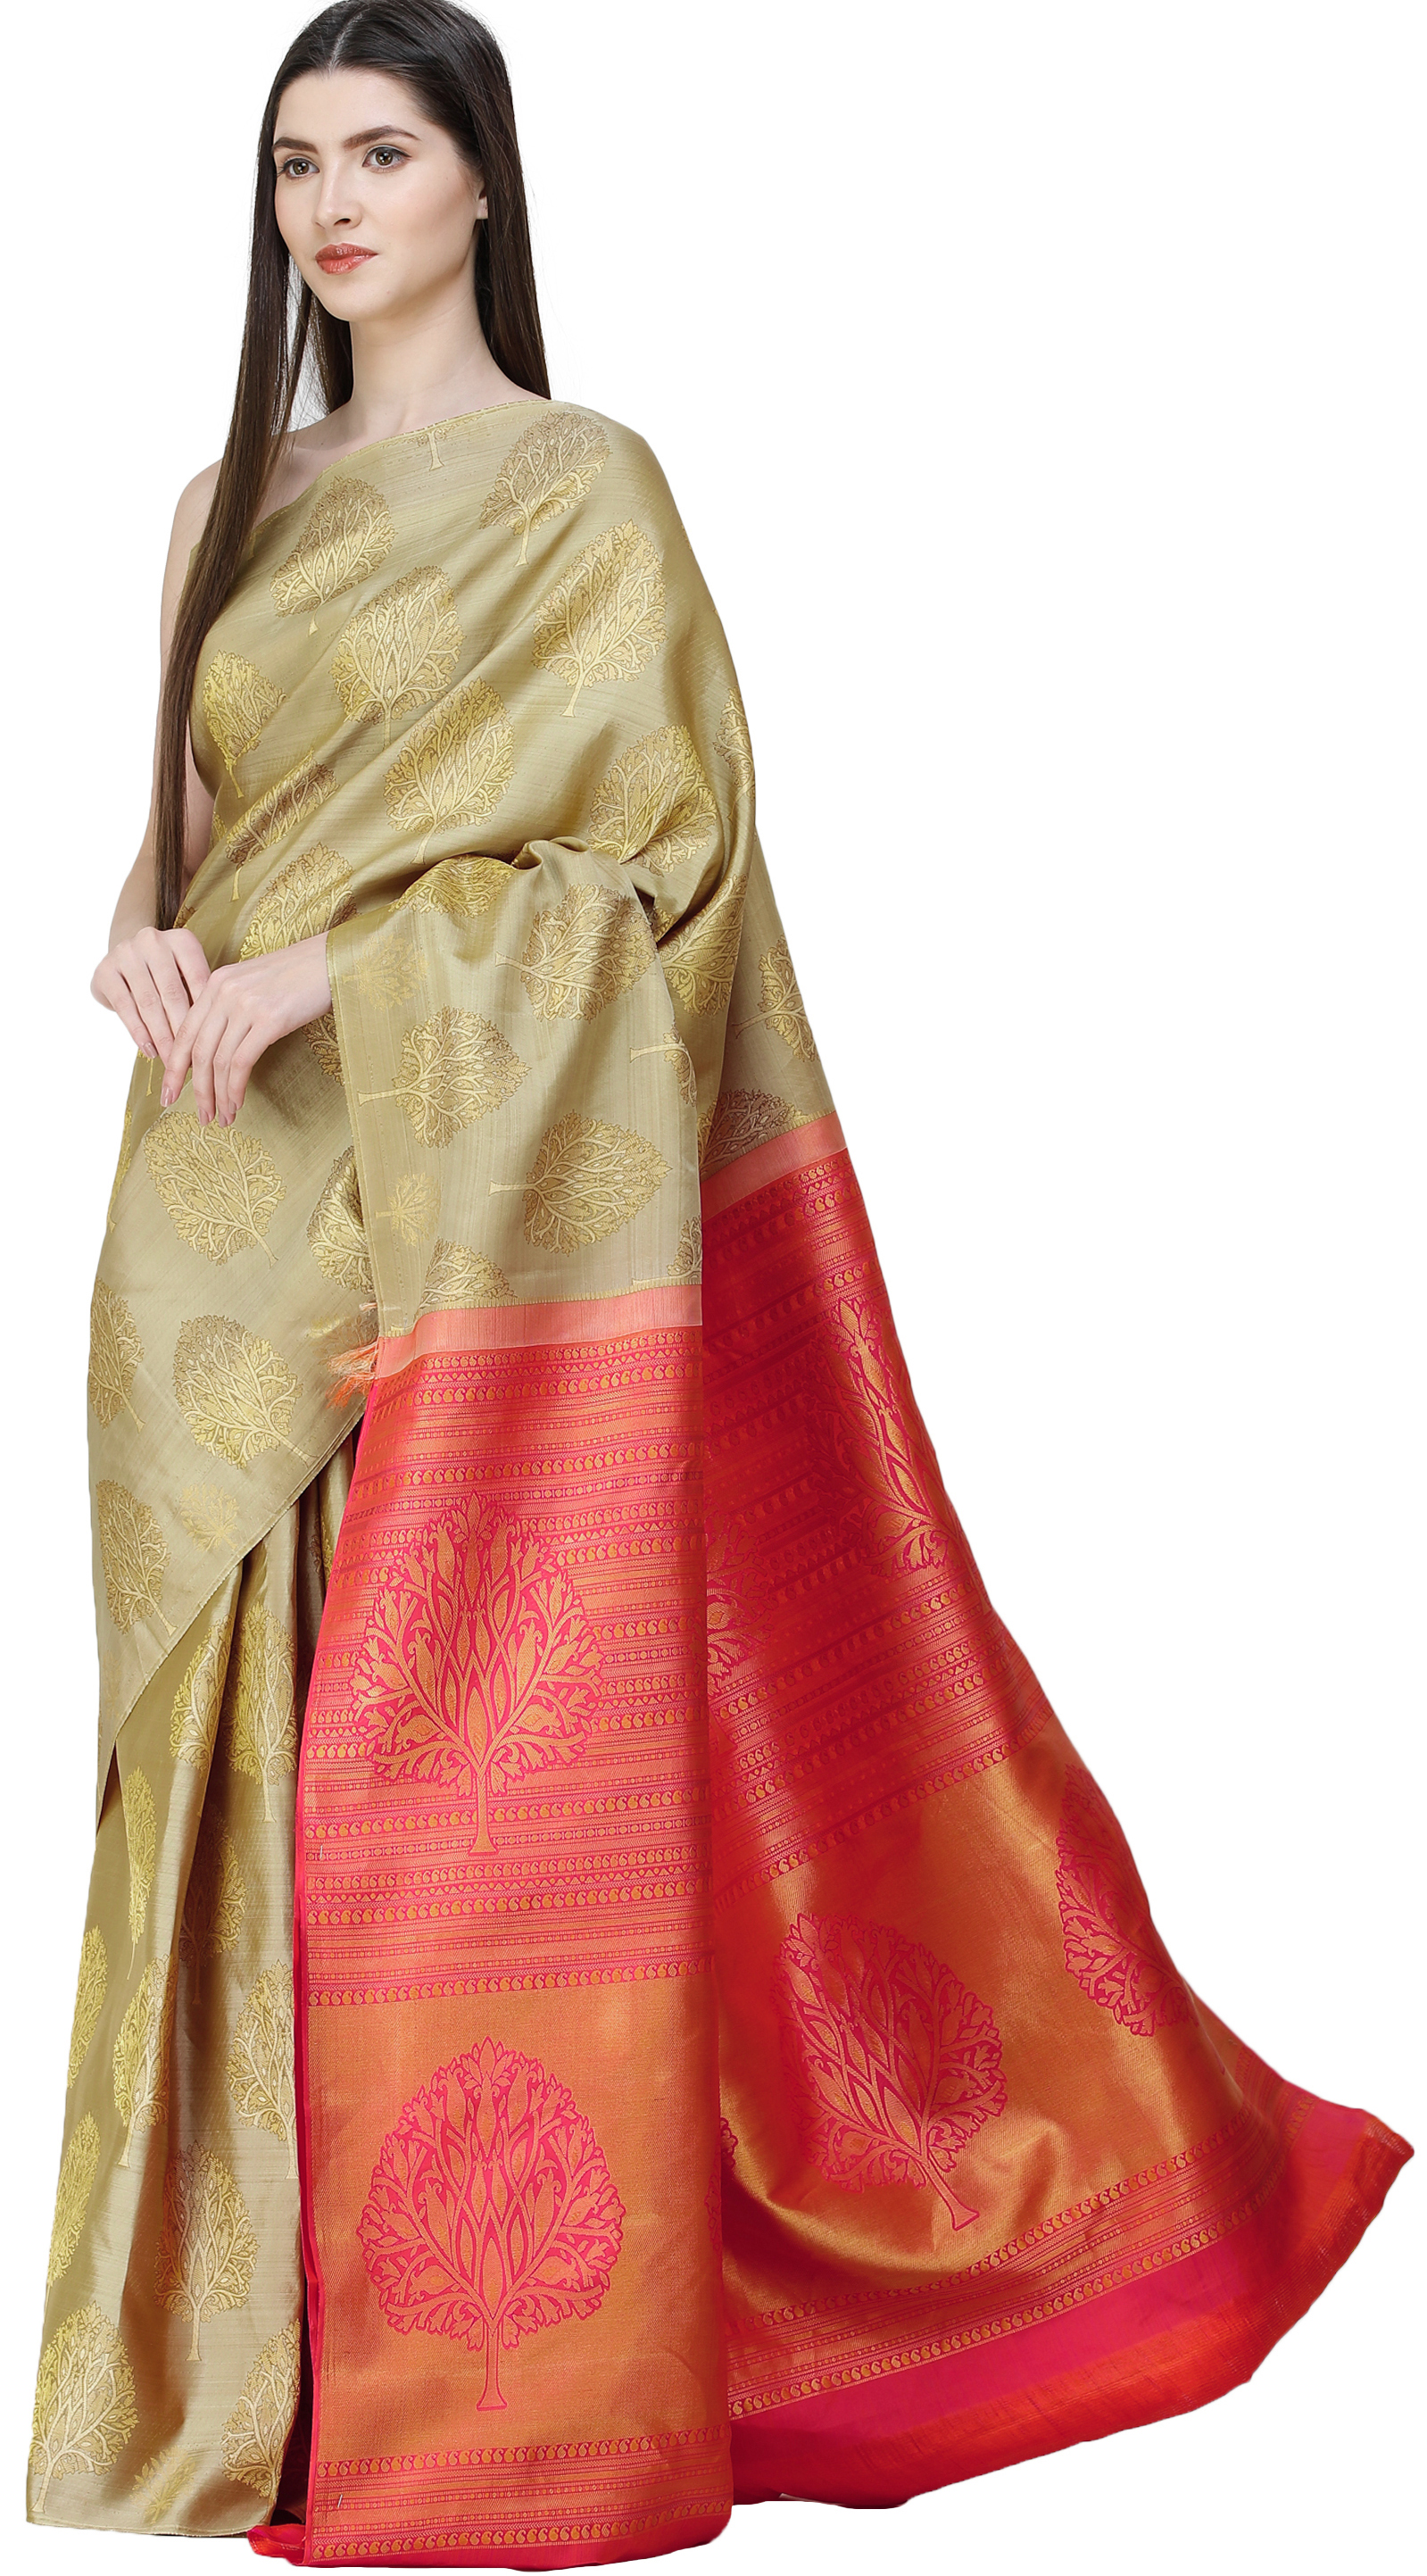 Gravel-Beige Uppada Fusion Sari from Bangalore with Zari-Woven